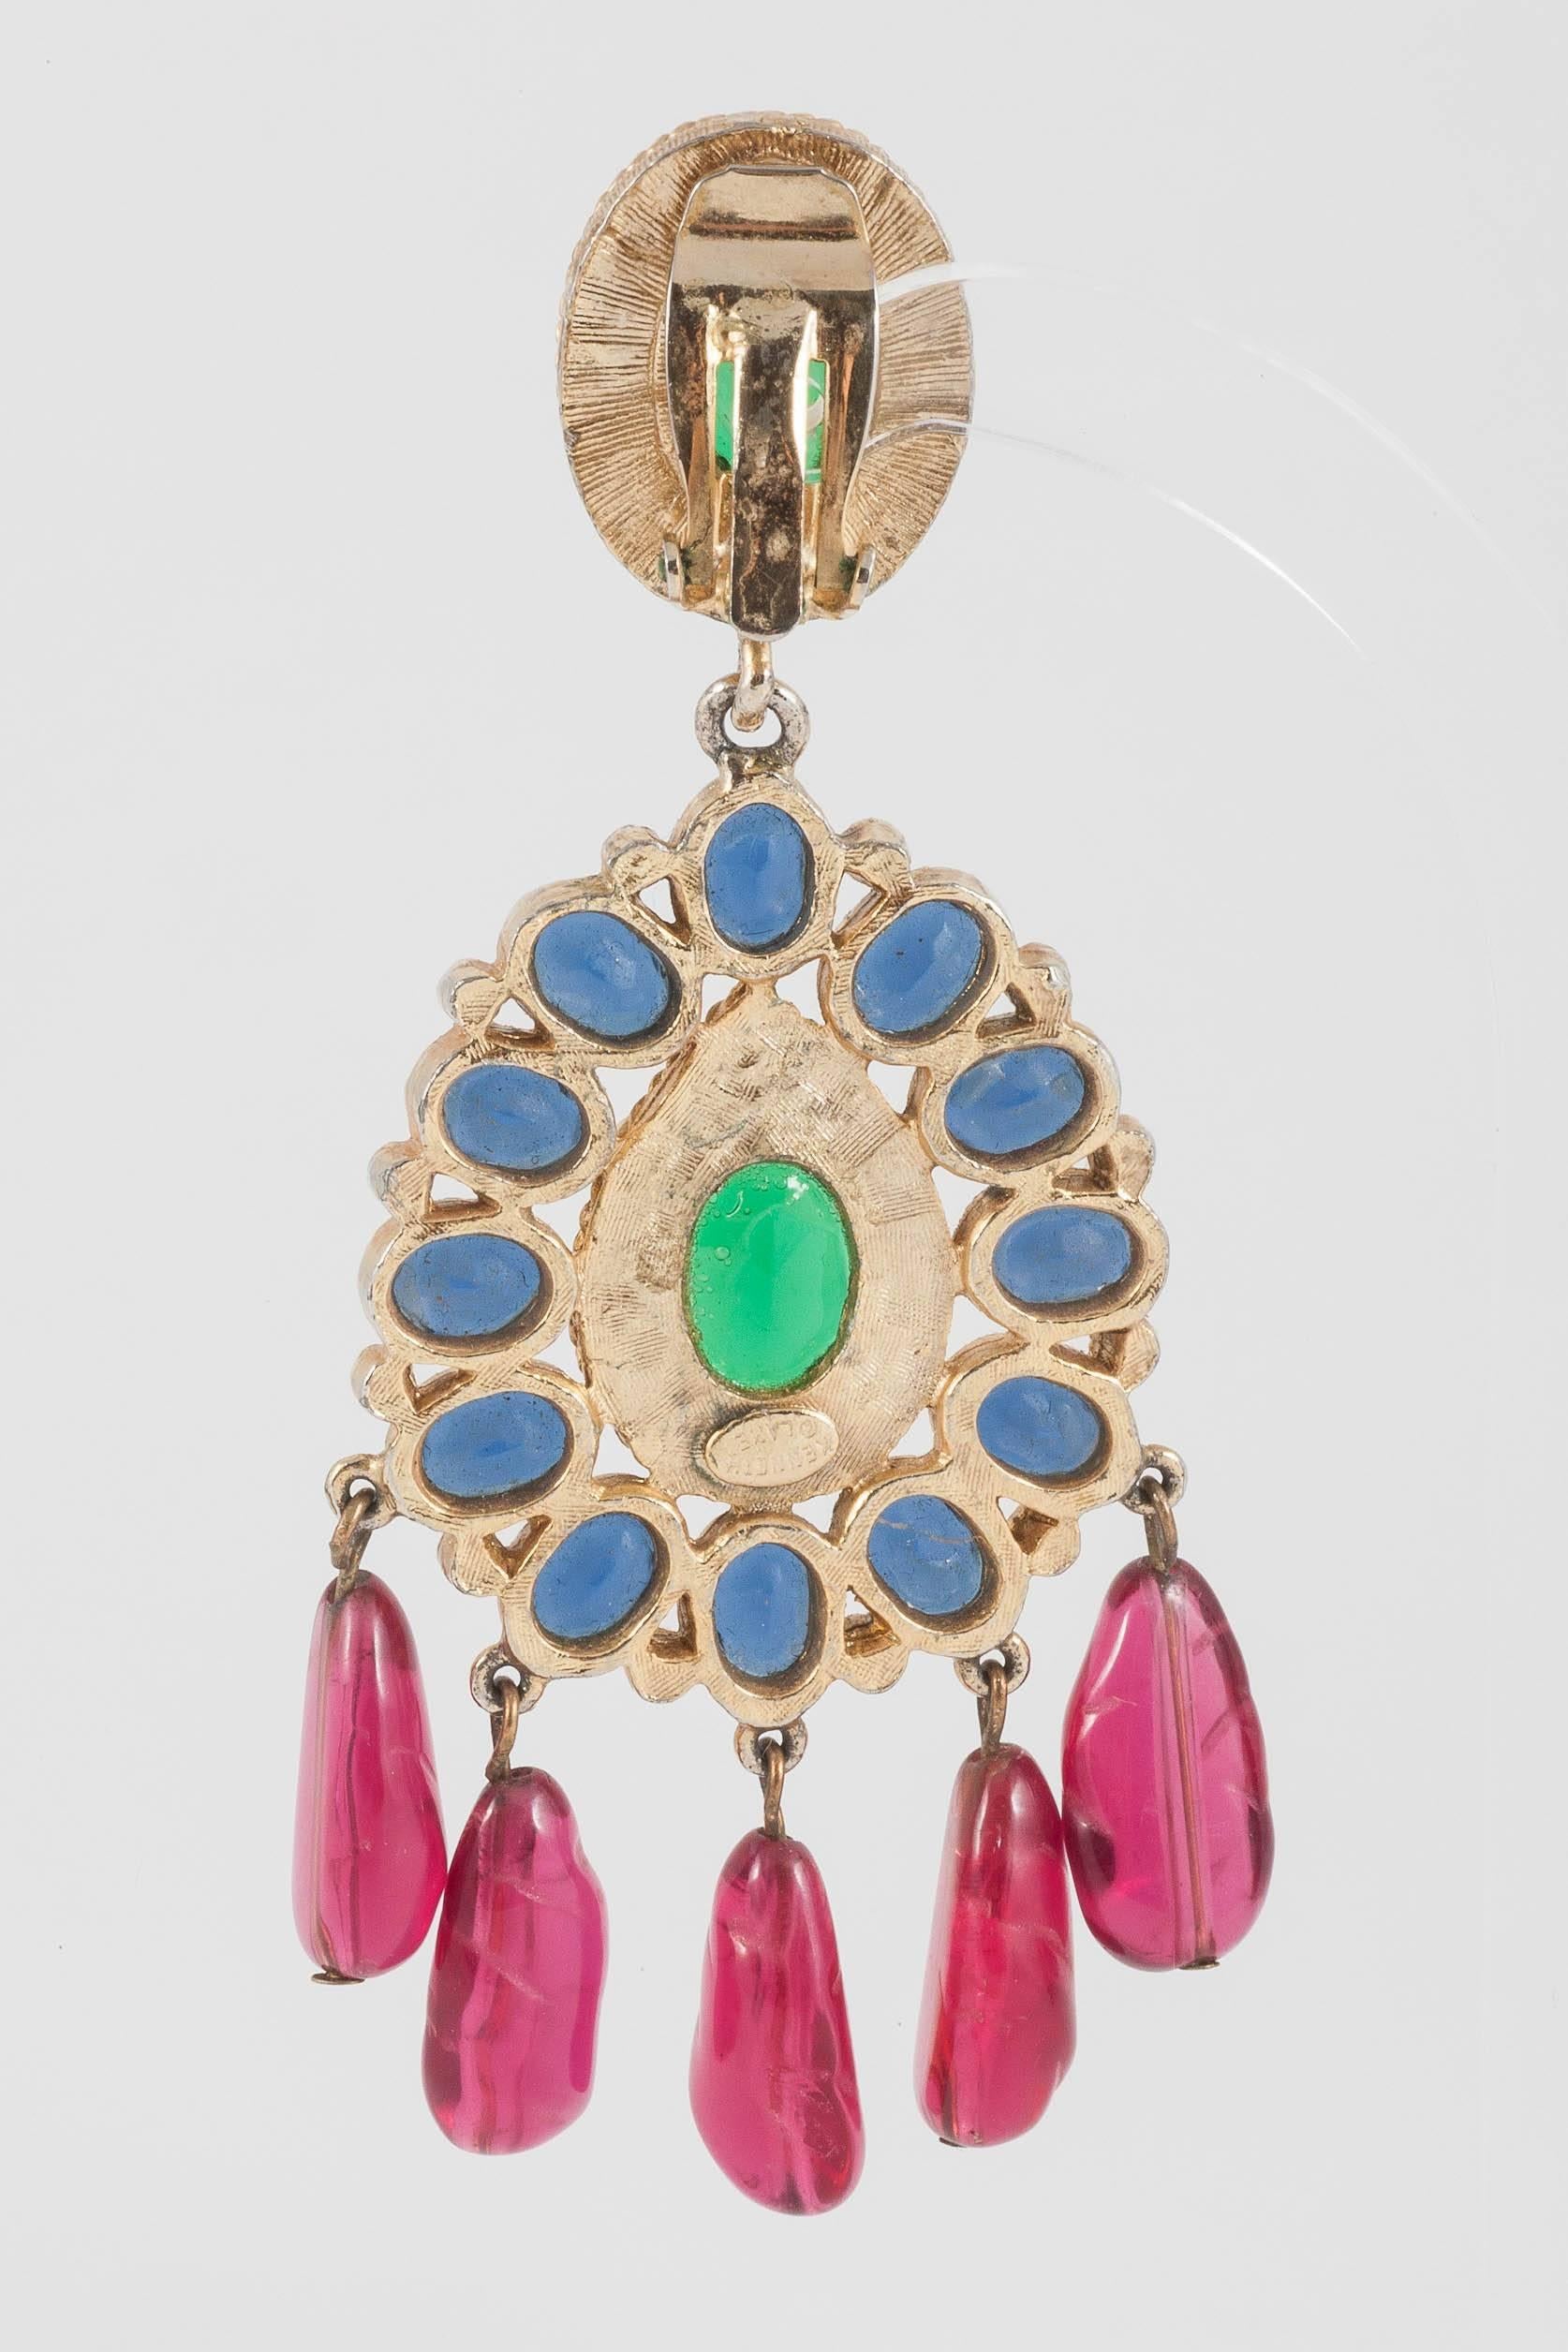 Women's Spectacular colourful 'moghul style' earrings, Kenneth Jay Lane, 1970s 